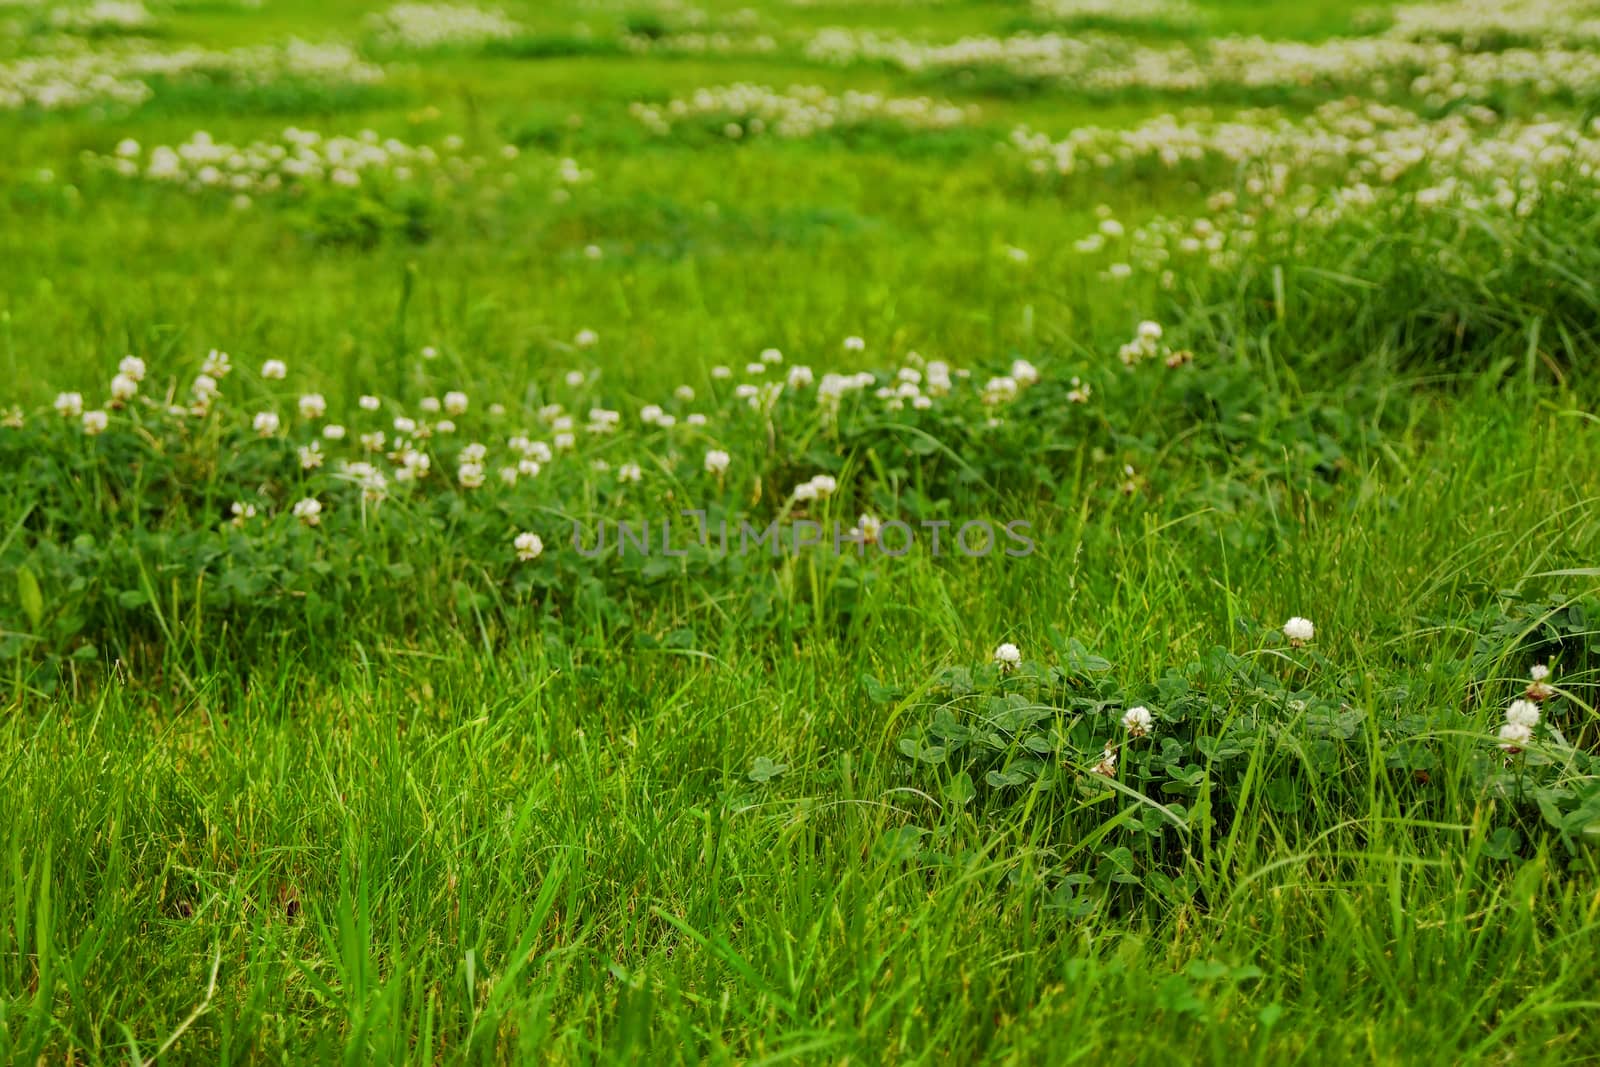 Green grass texture from a field by mowgli